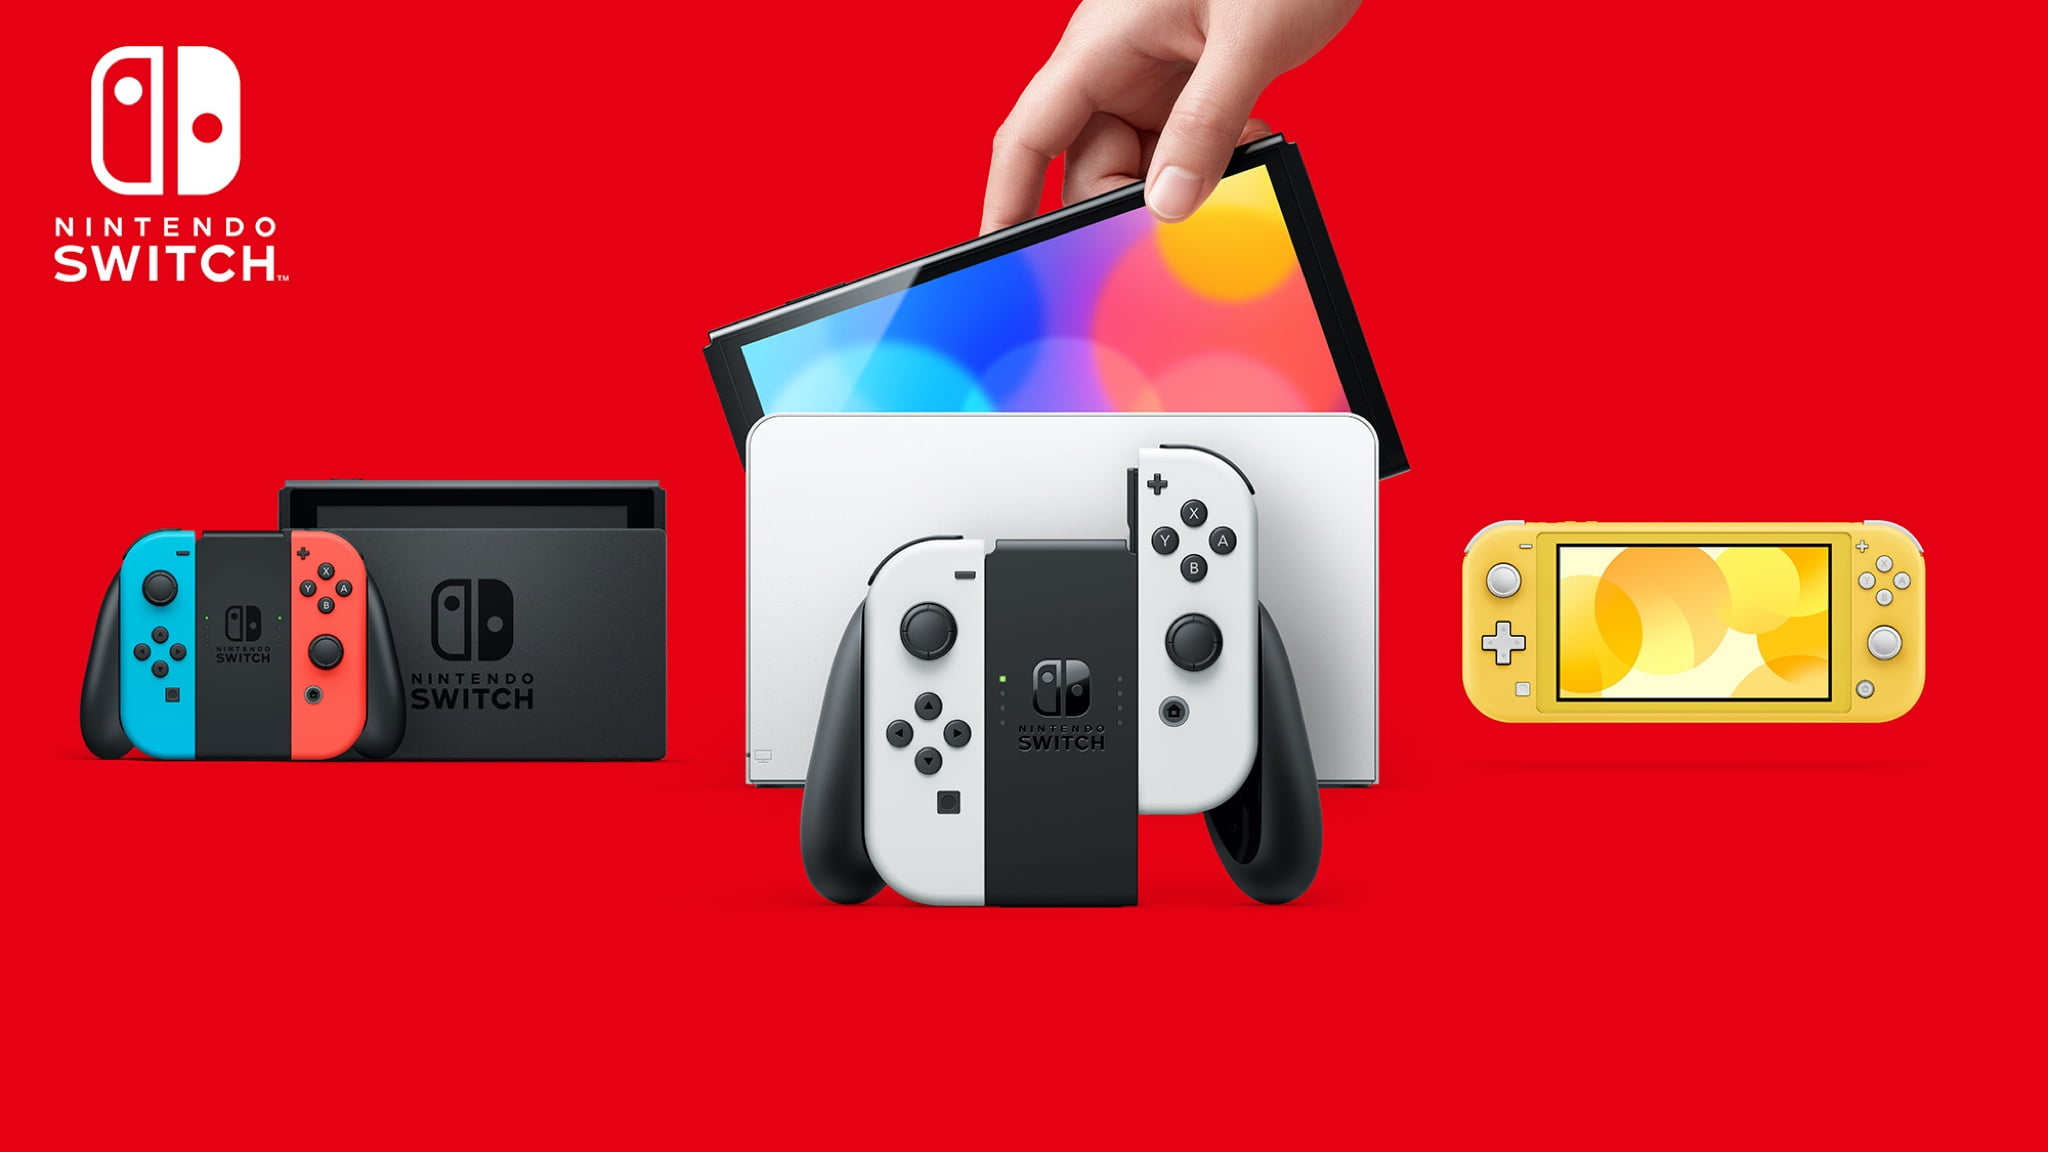 Nintendo Switch ストア限定版 カラーカスタマイズ スイッチ 本体